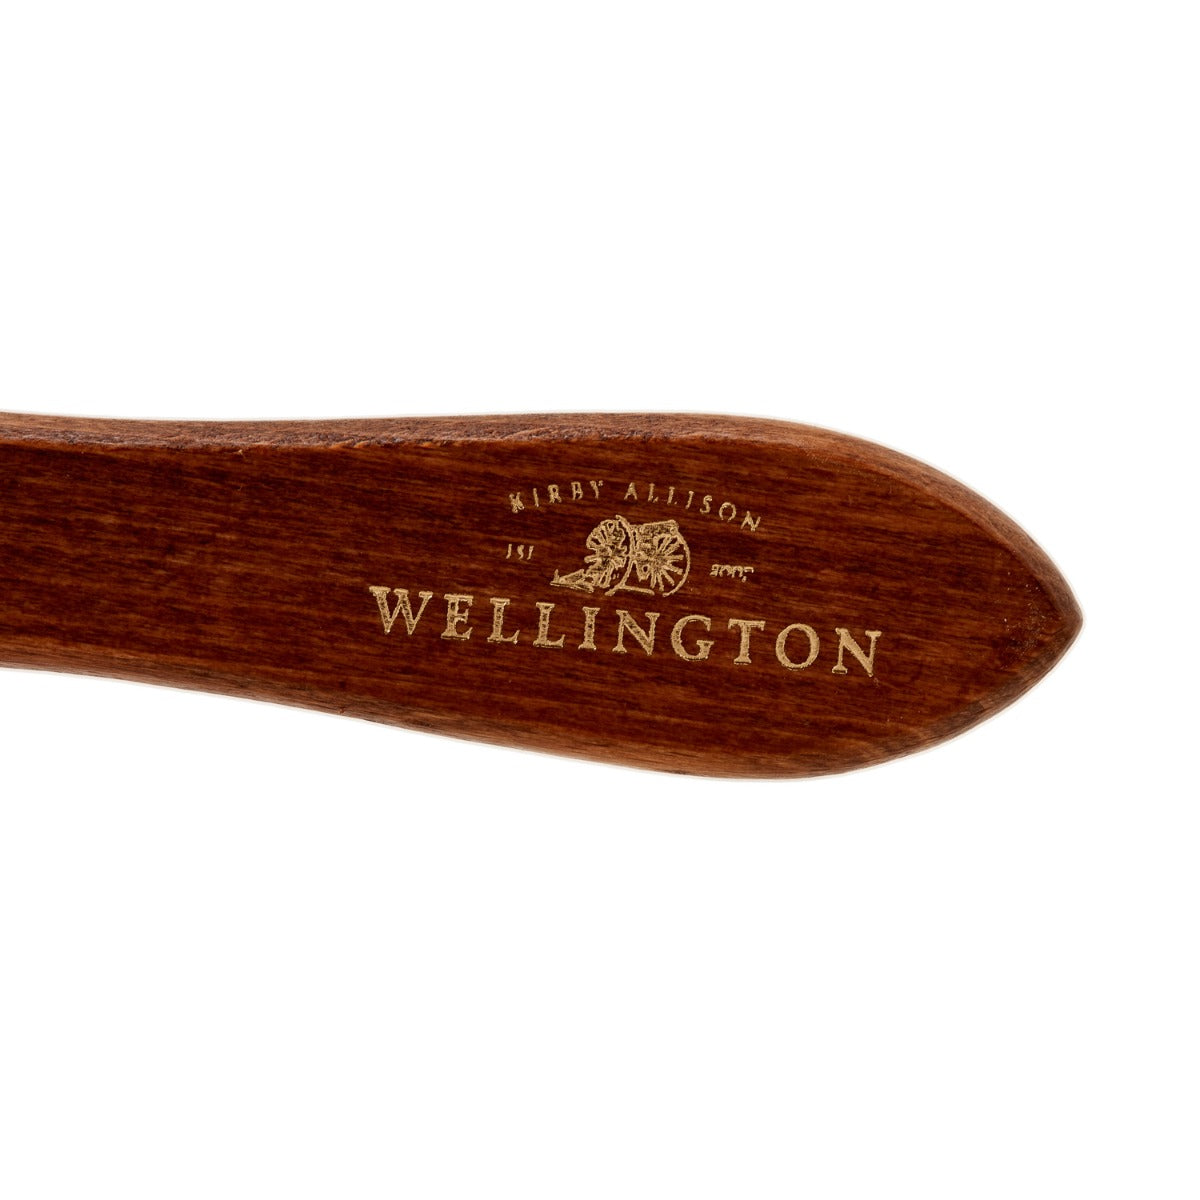 A Wellington Deluxe Shoe Polish Dauber from KirbyAllison.com with the word Wellington on it.